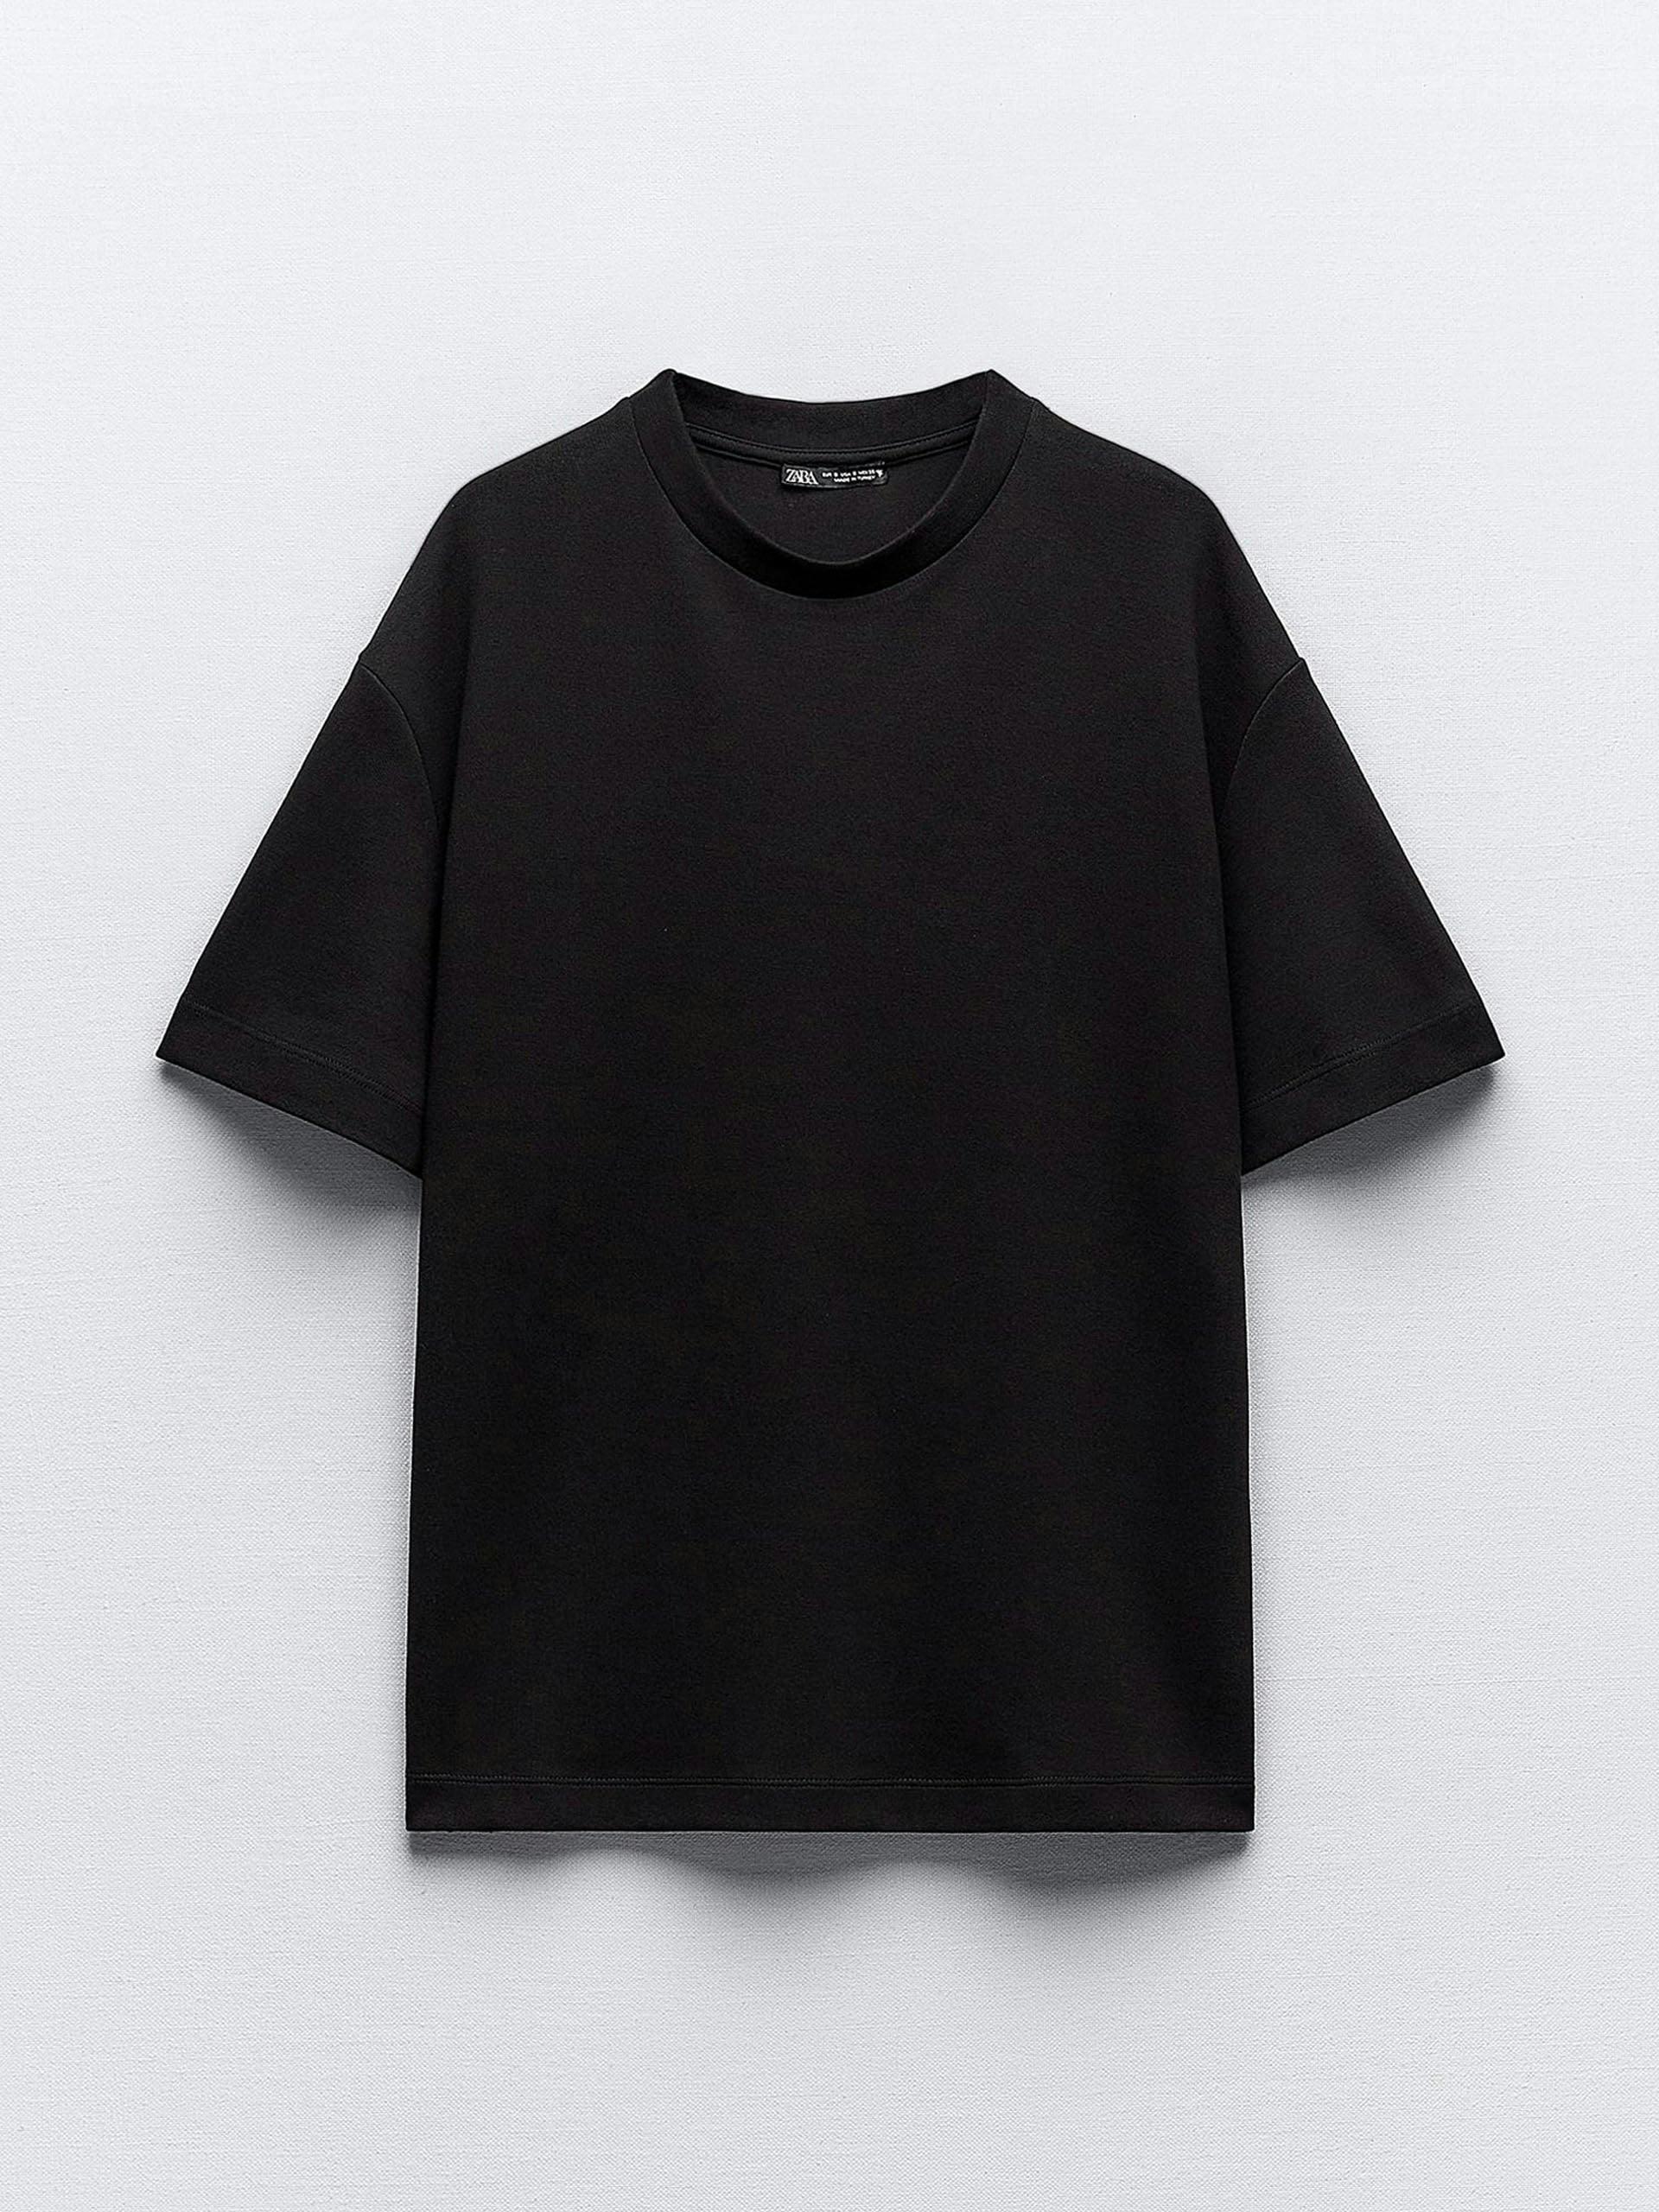 Oversize cotton blend black t-shirt